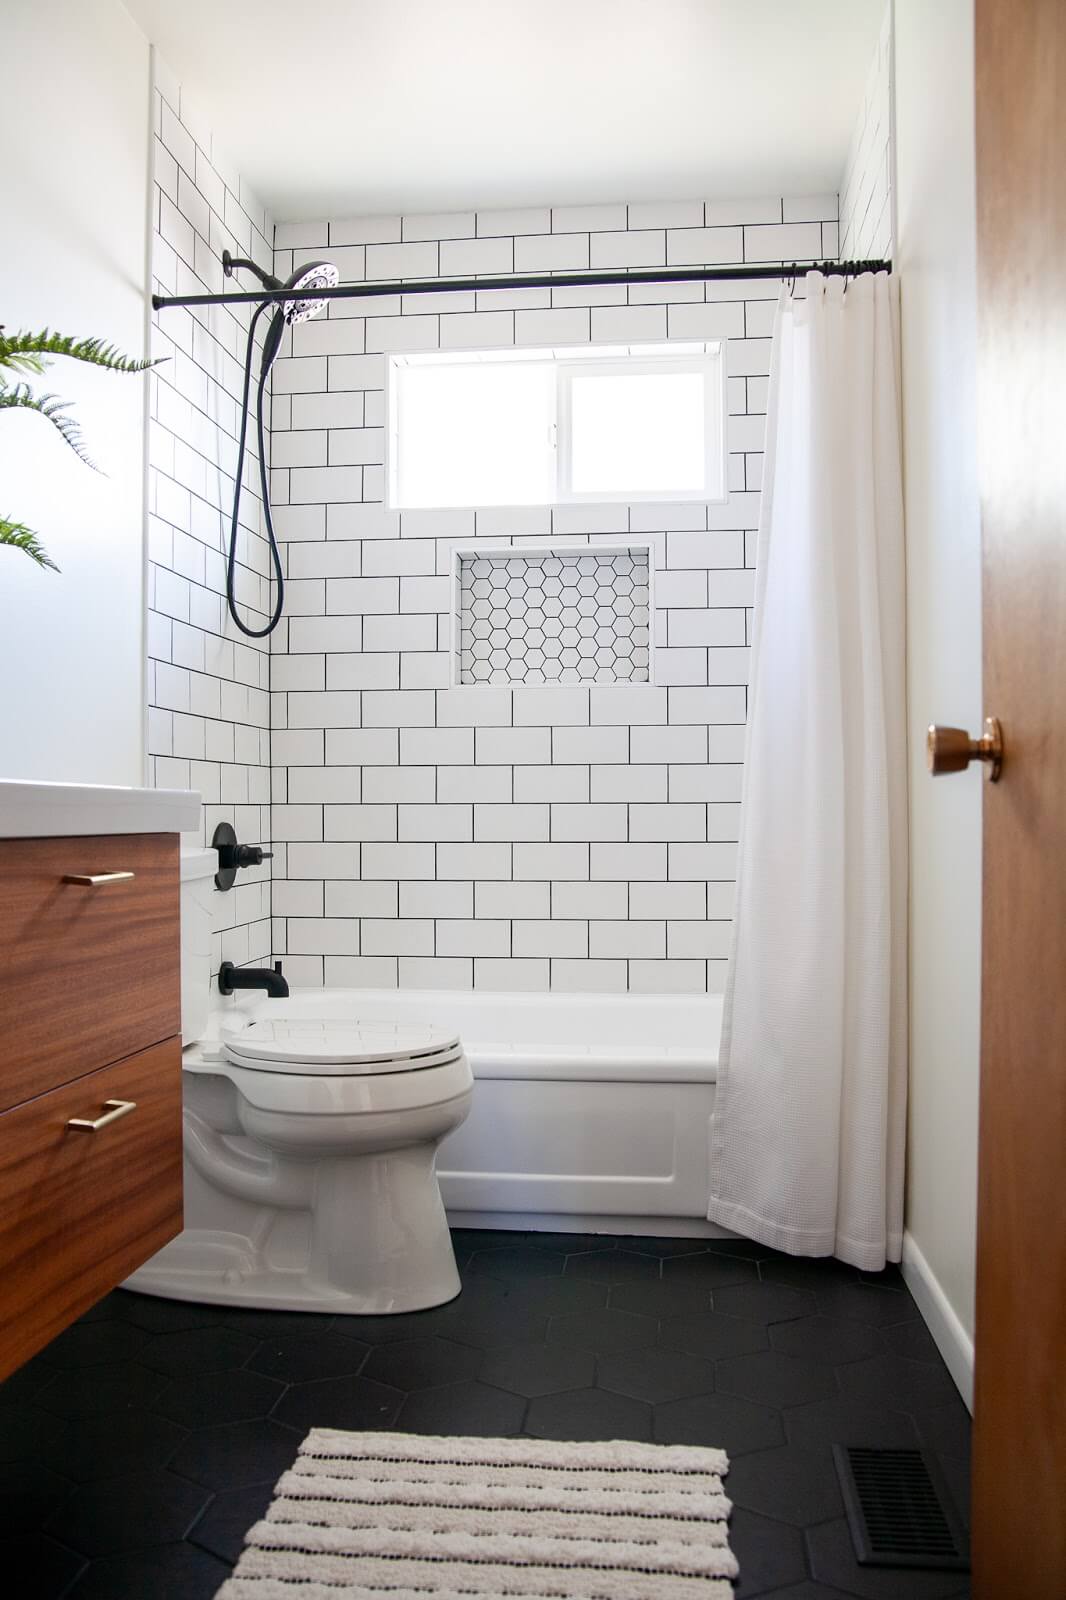 05 bathroom flooring ideas homebnc